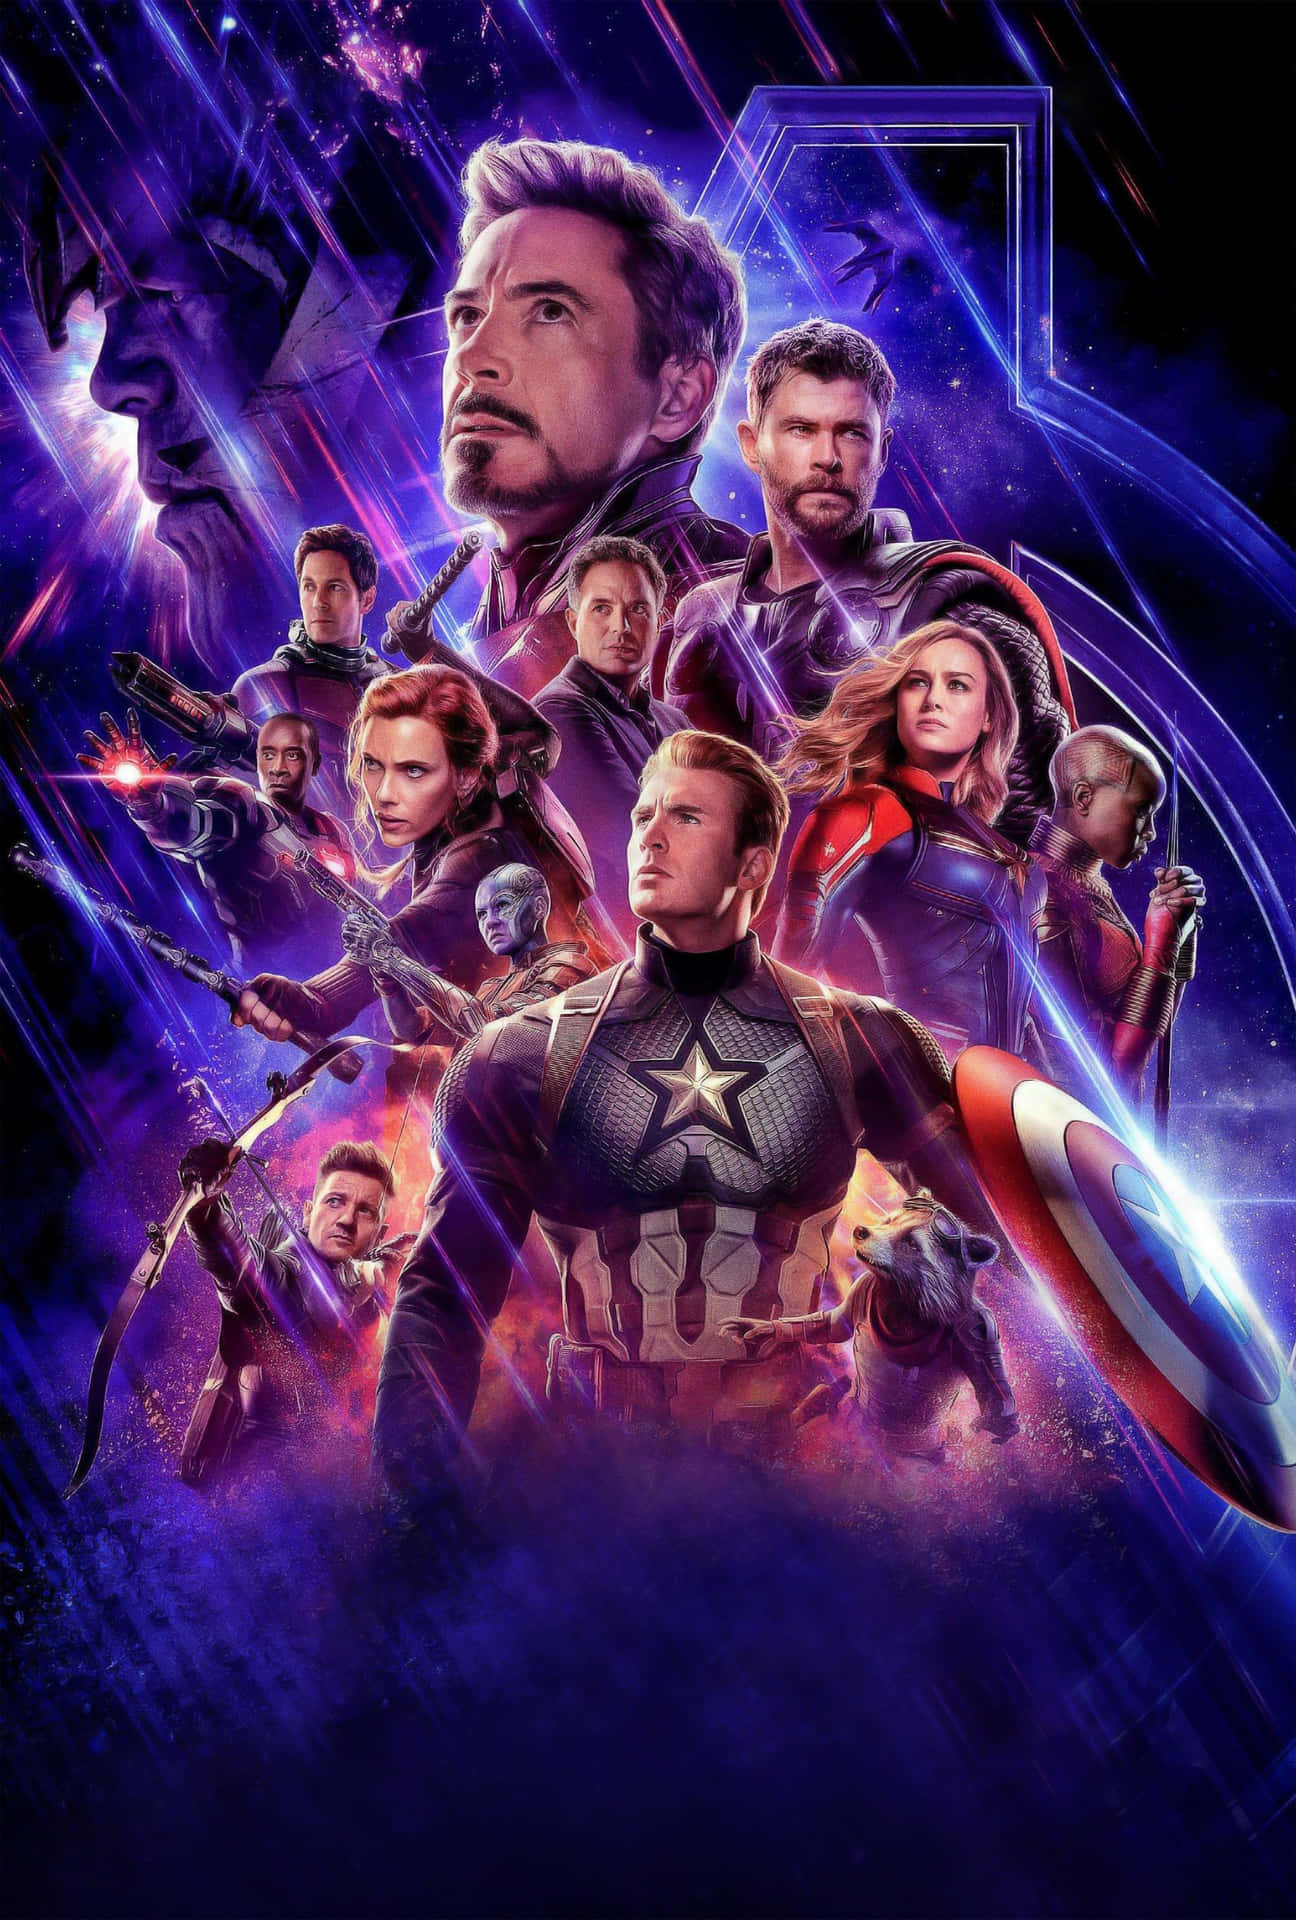 The Avengers reunite in the MCU's epic final chapter, Avenger Endgame